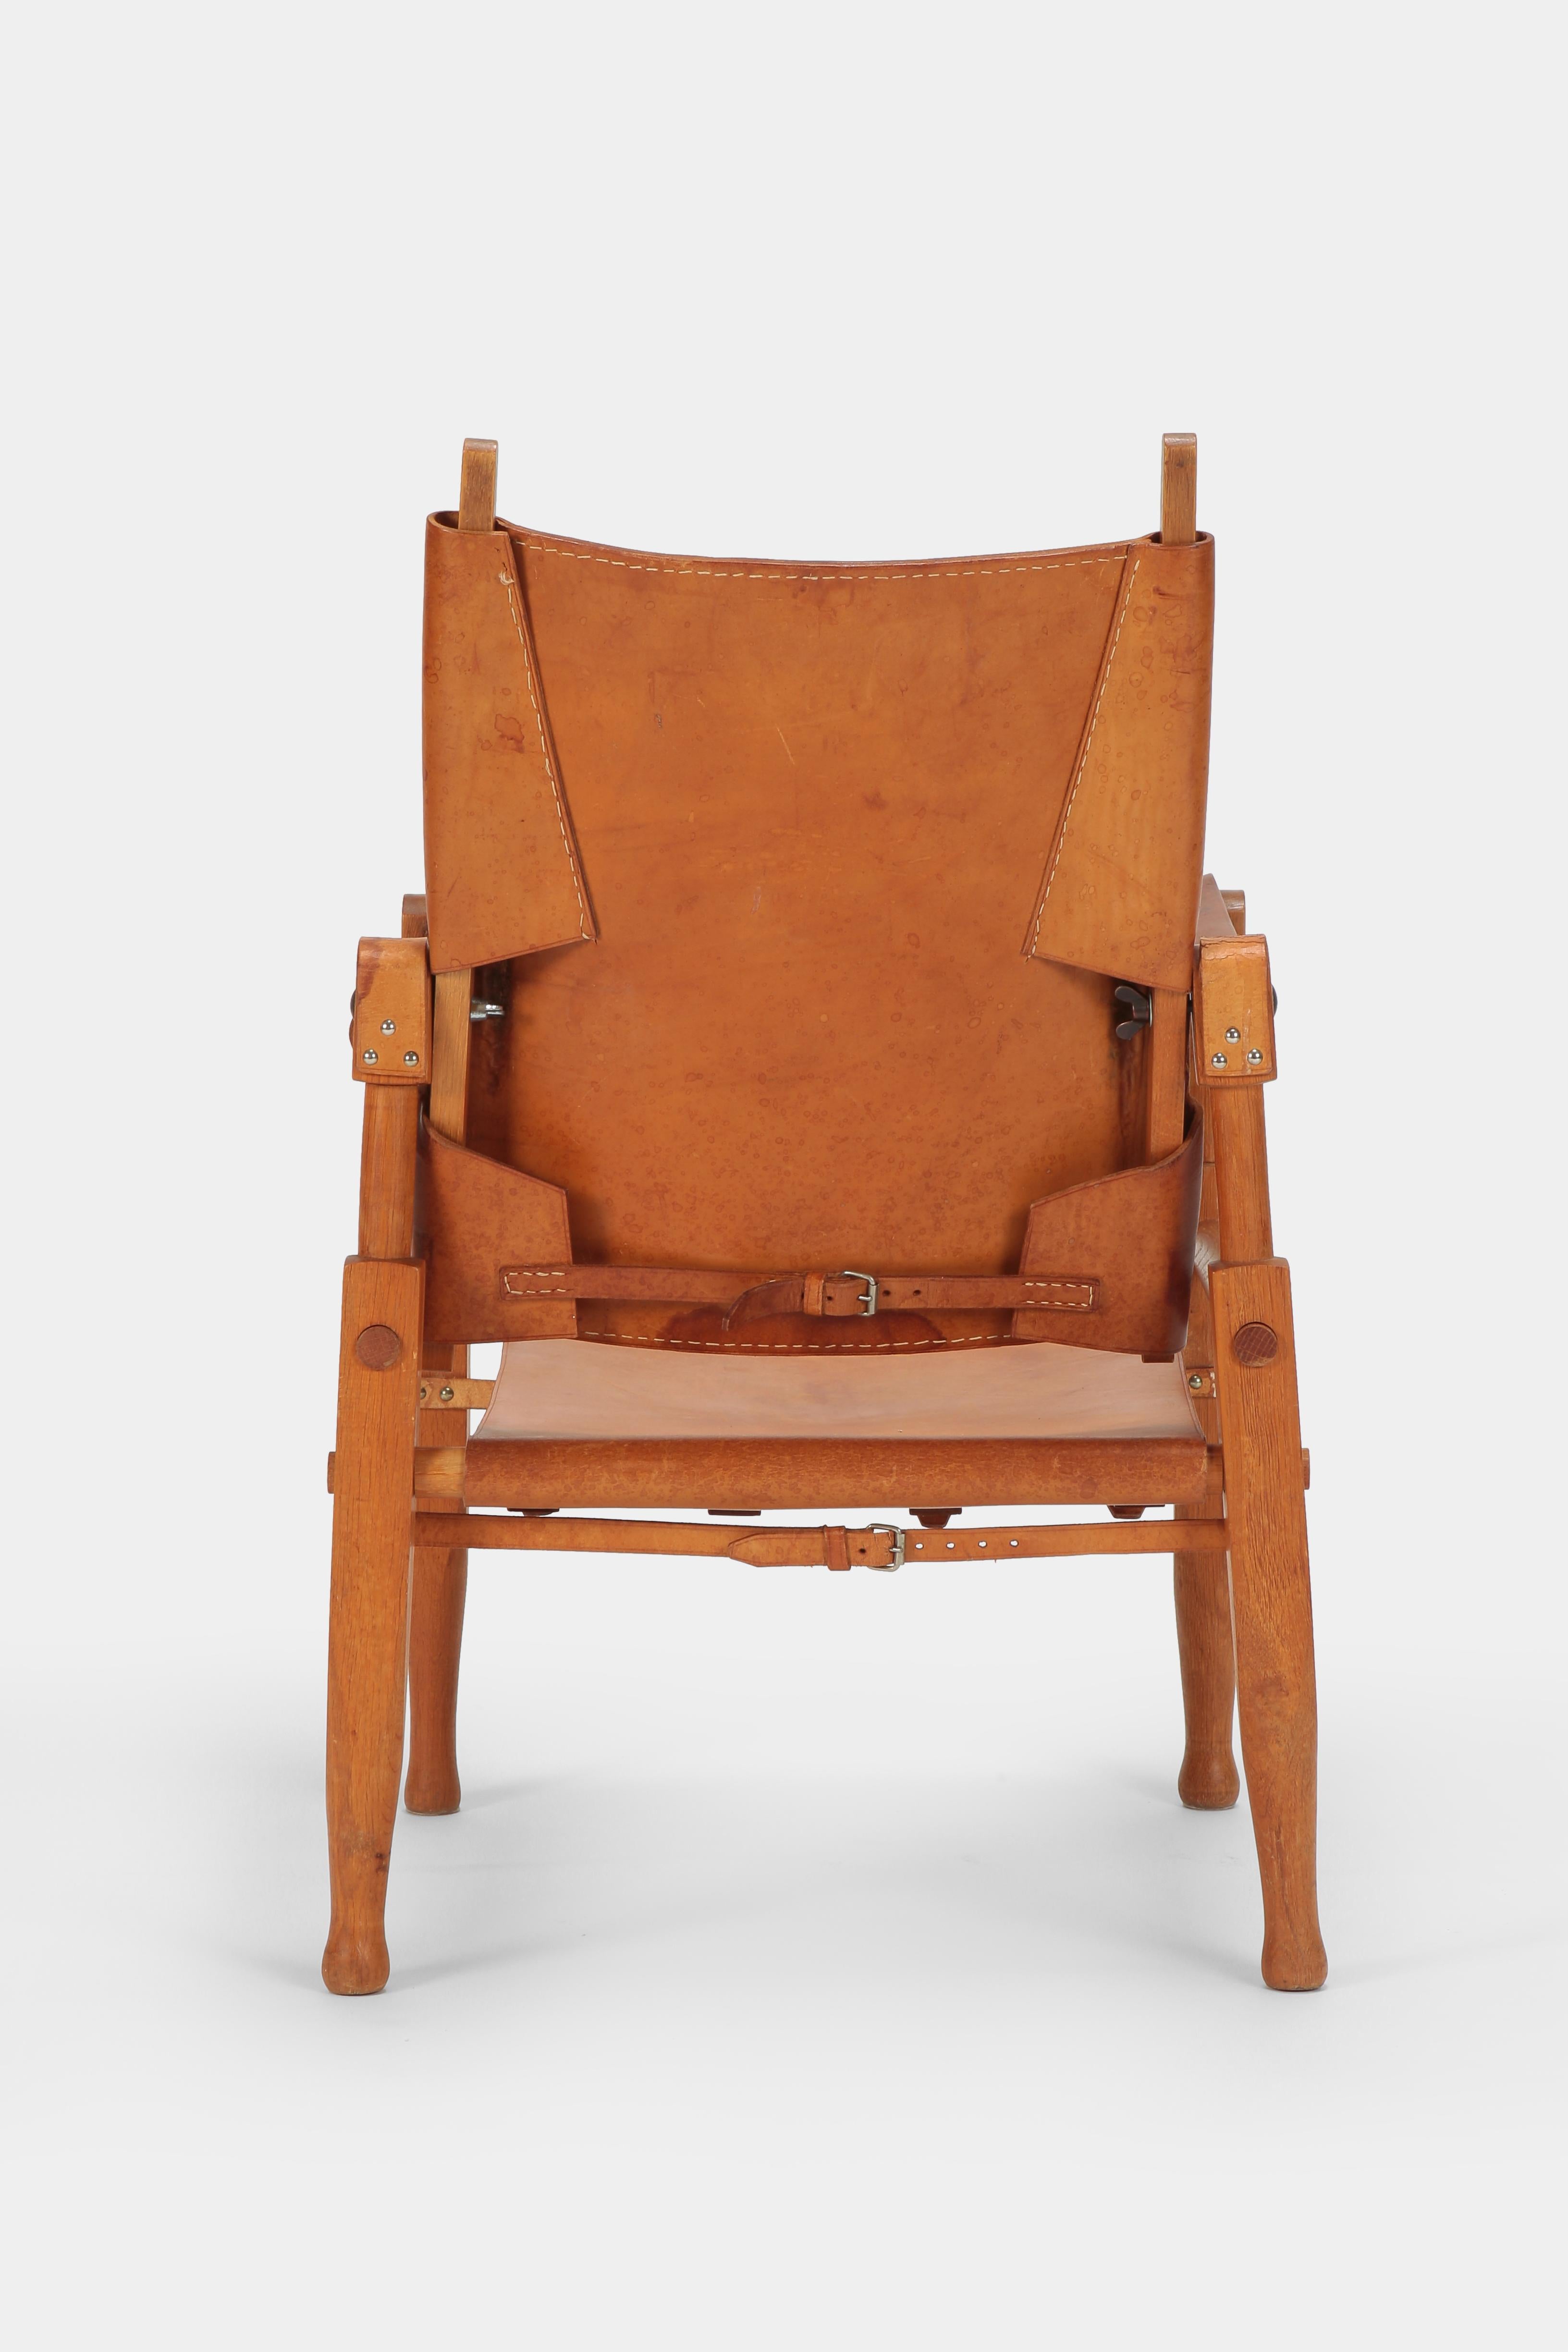 Leather Wilhelm Kienzle Safari Chair Wohnbedarf, 1950s